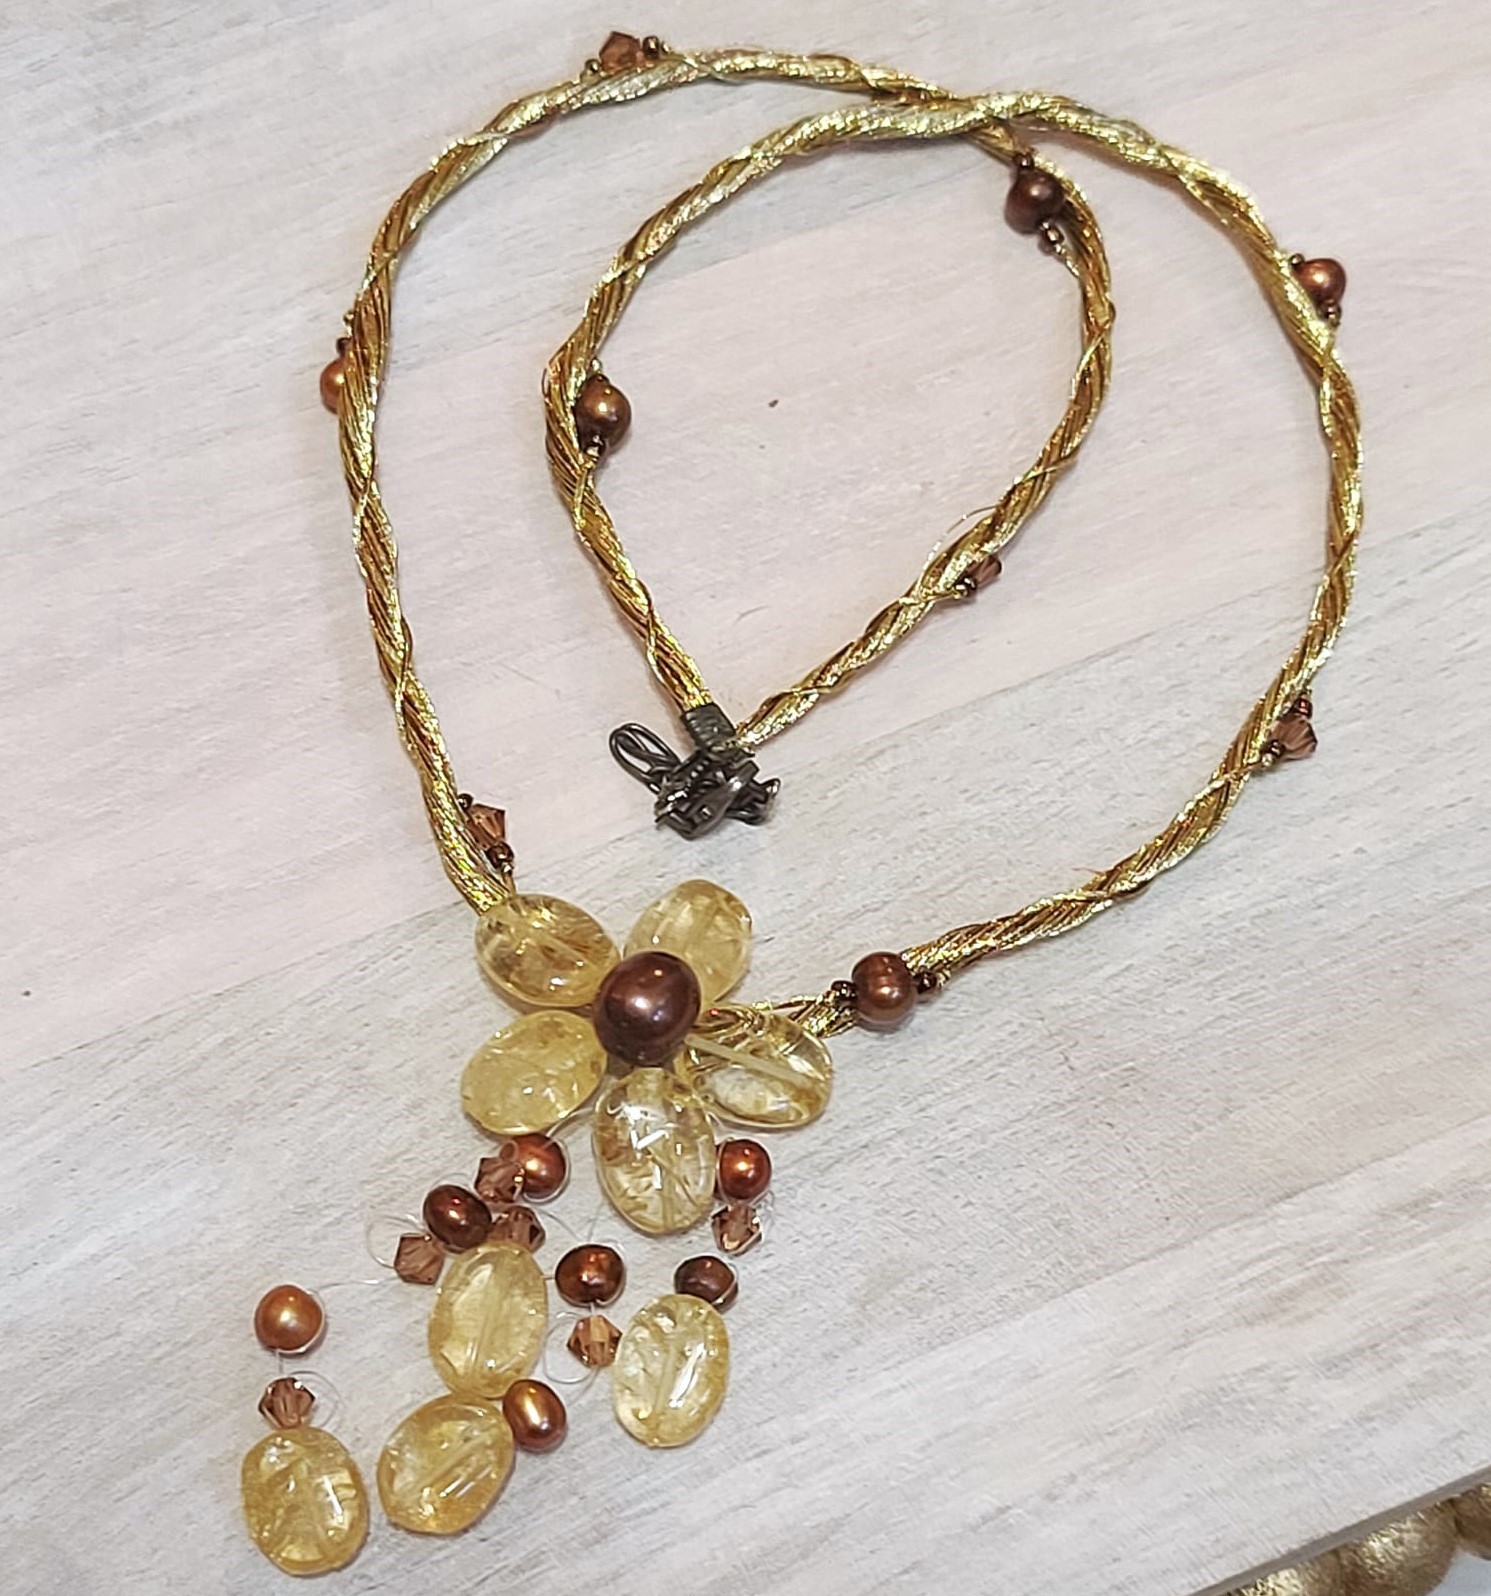 Rocky Crystal, Swarovki Crystal & Freshwater Pearls Necklace